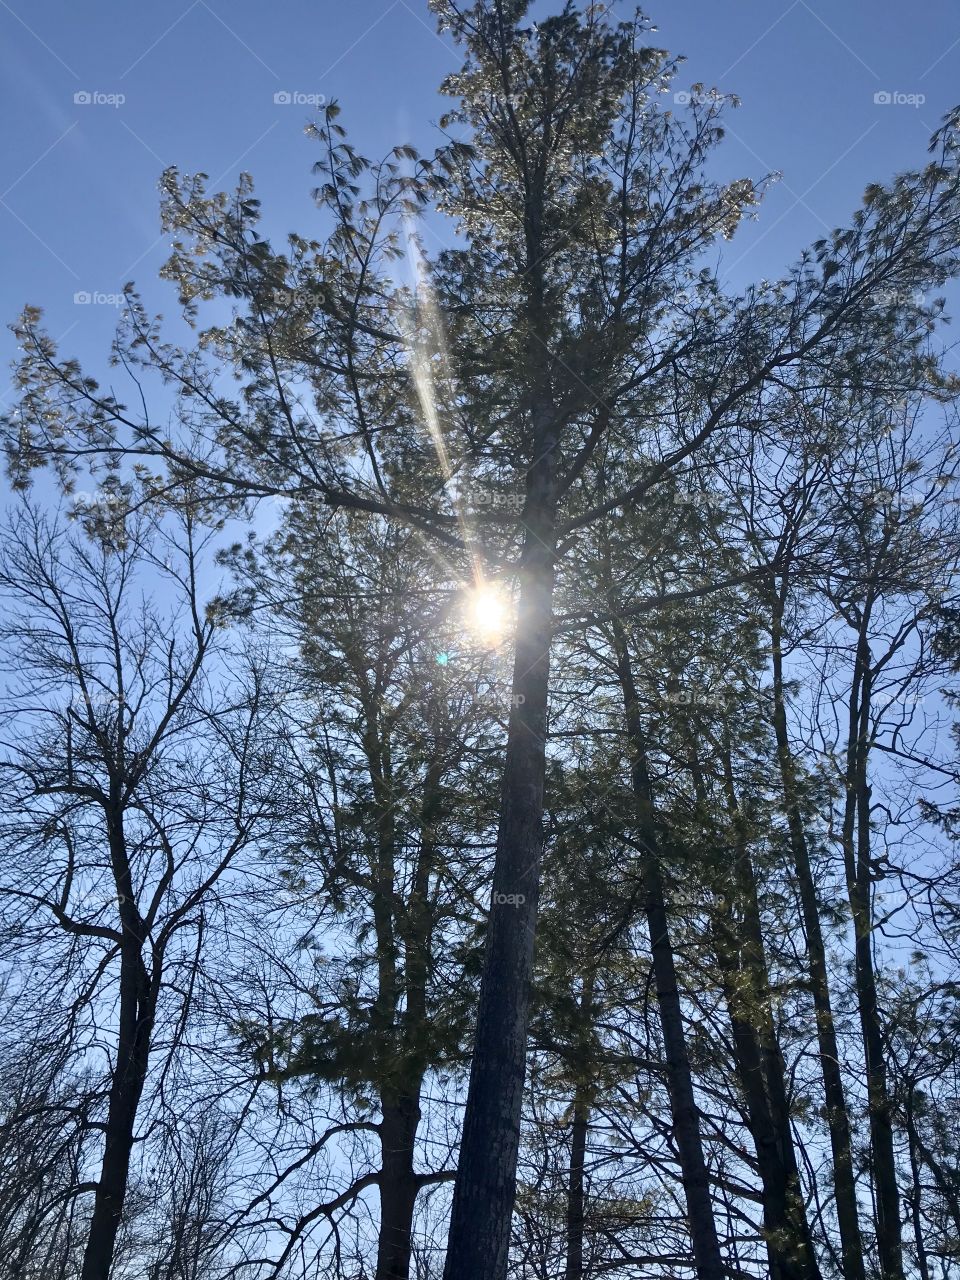 Light between the trees